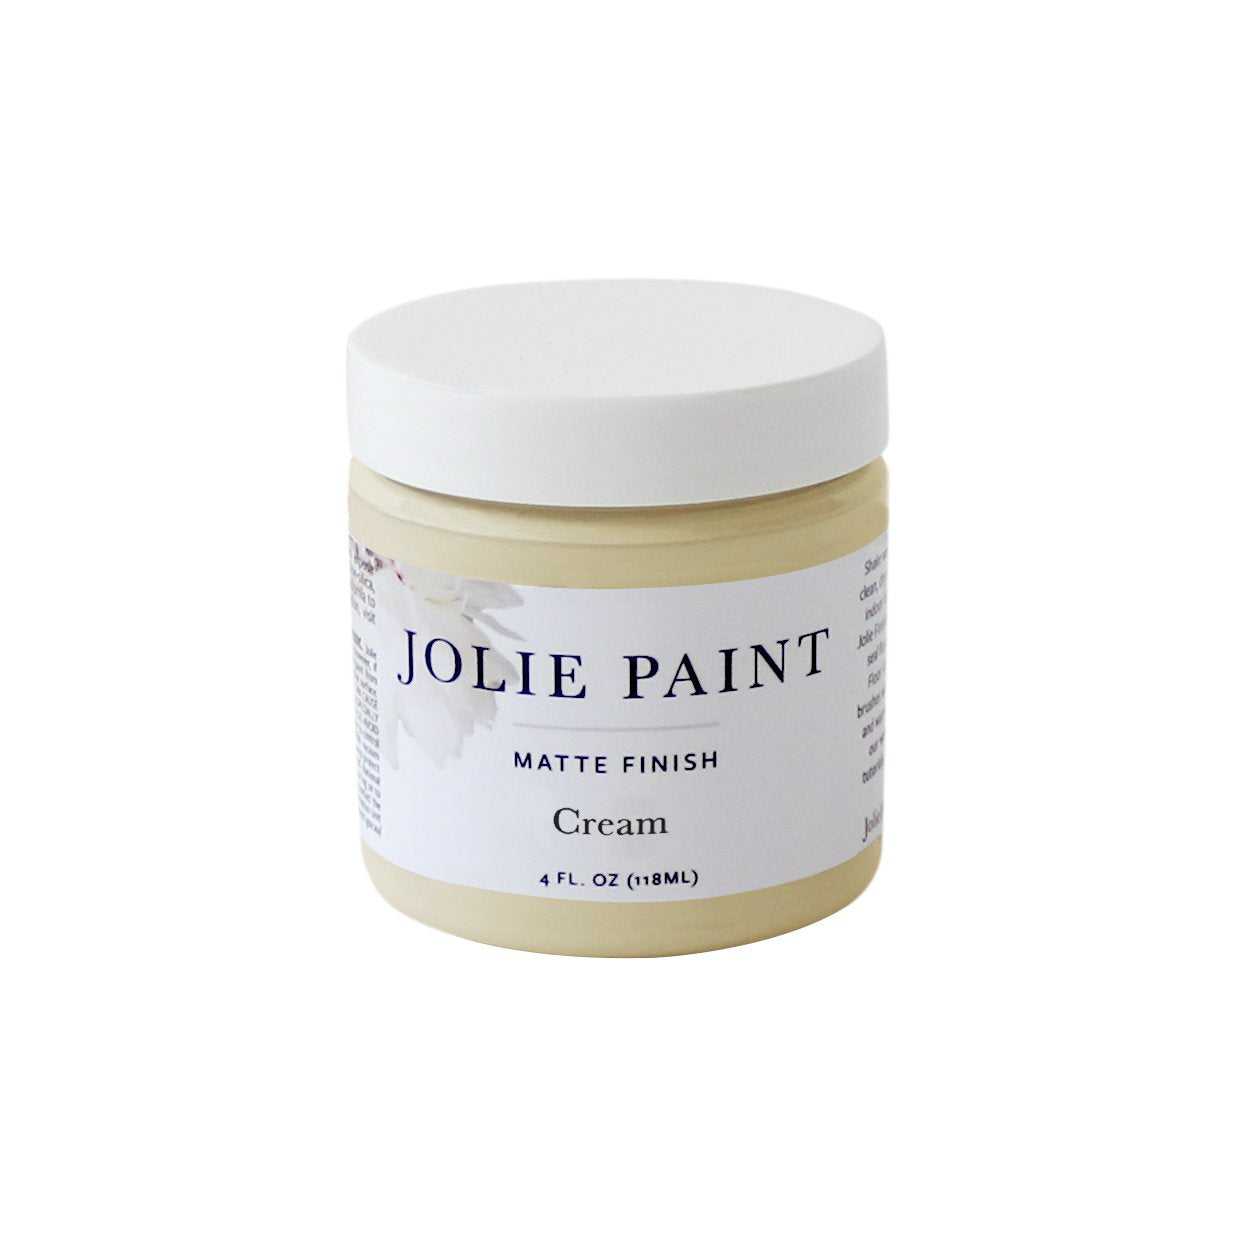 Jolie Paint - Matte Finish - Cream